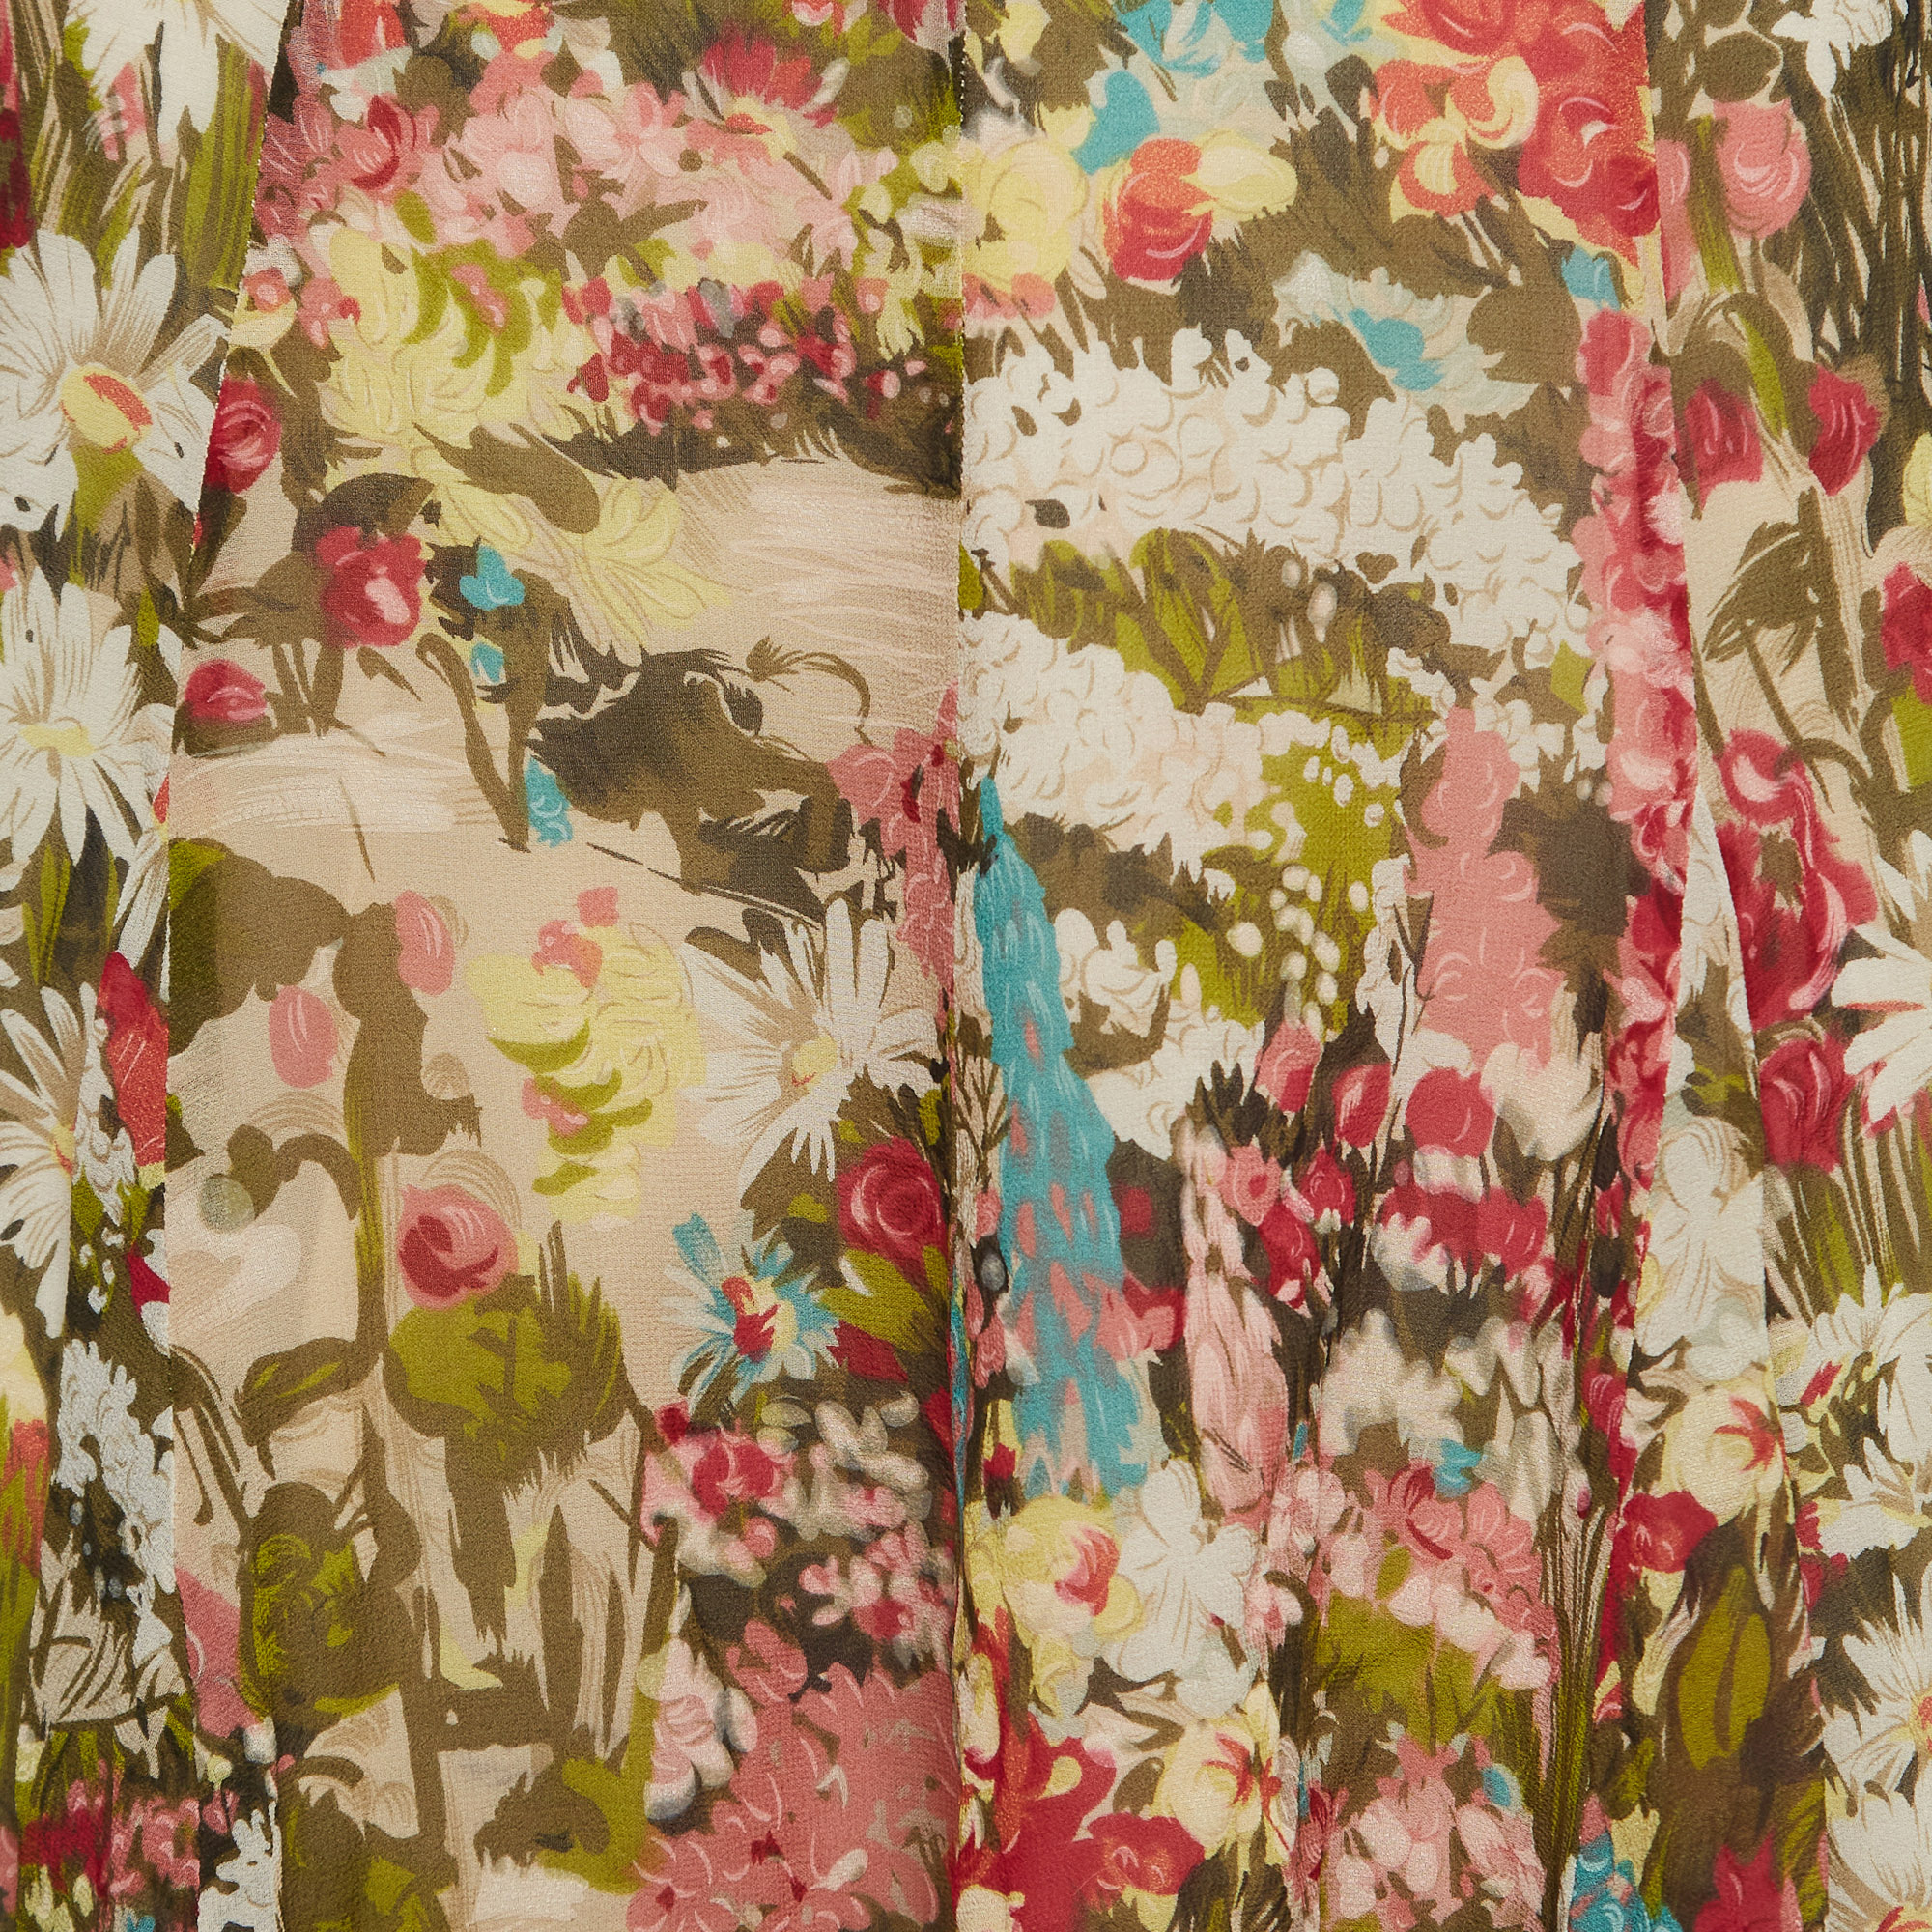 Kenzo Multicolor Floral Print Flared Midi Skirt M